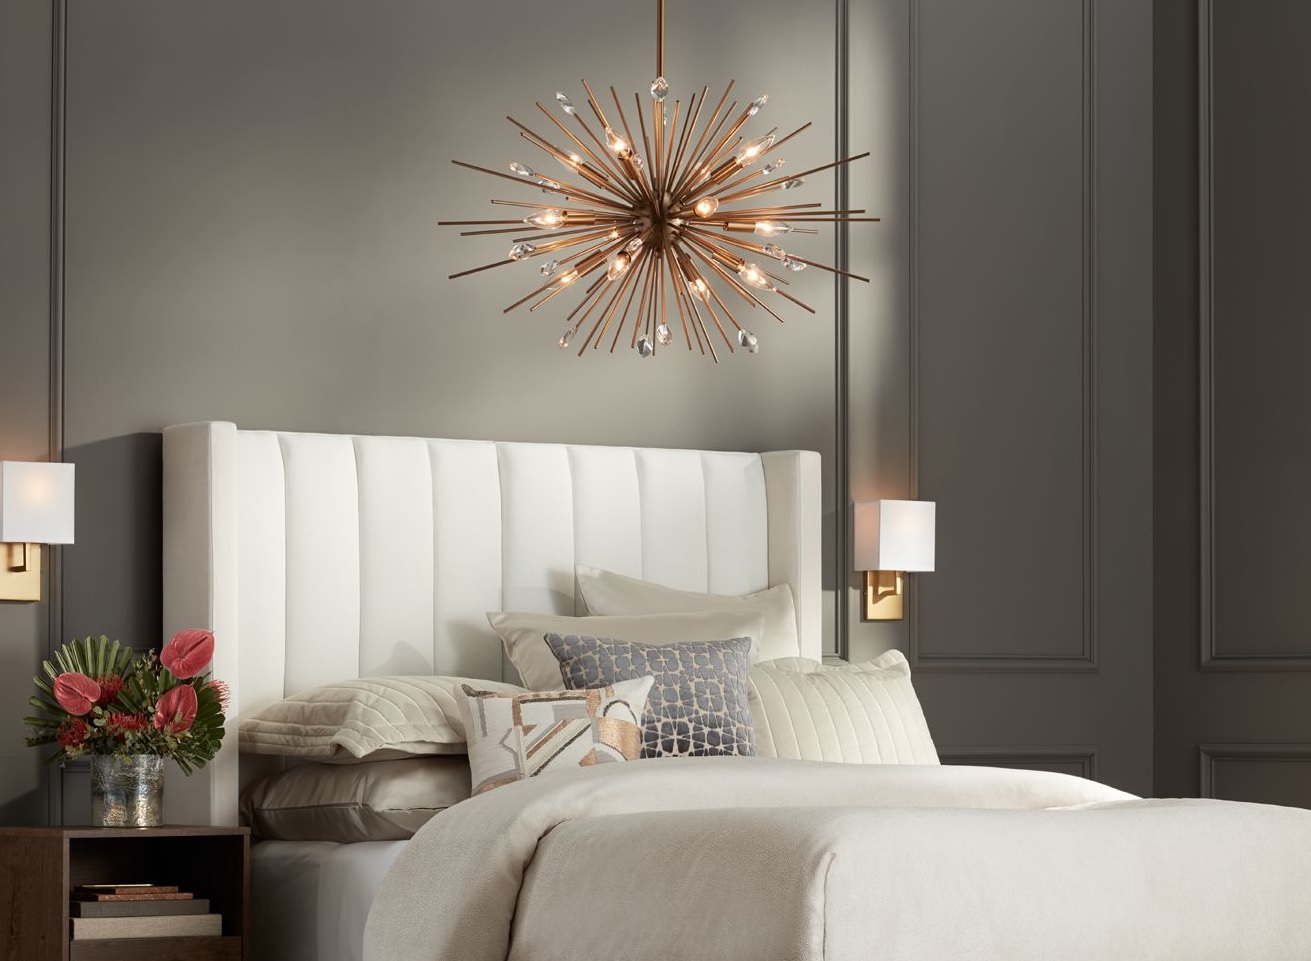 51 bedroom chandeliers for elegant, atmospheric illumination